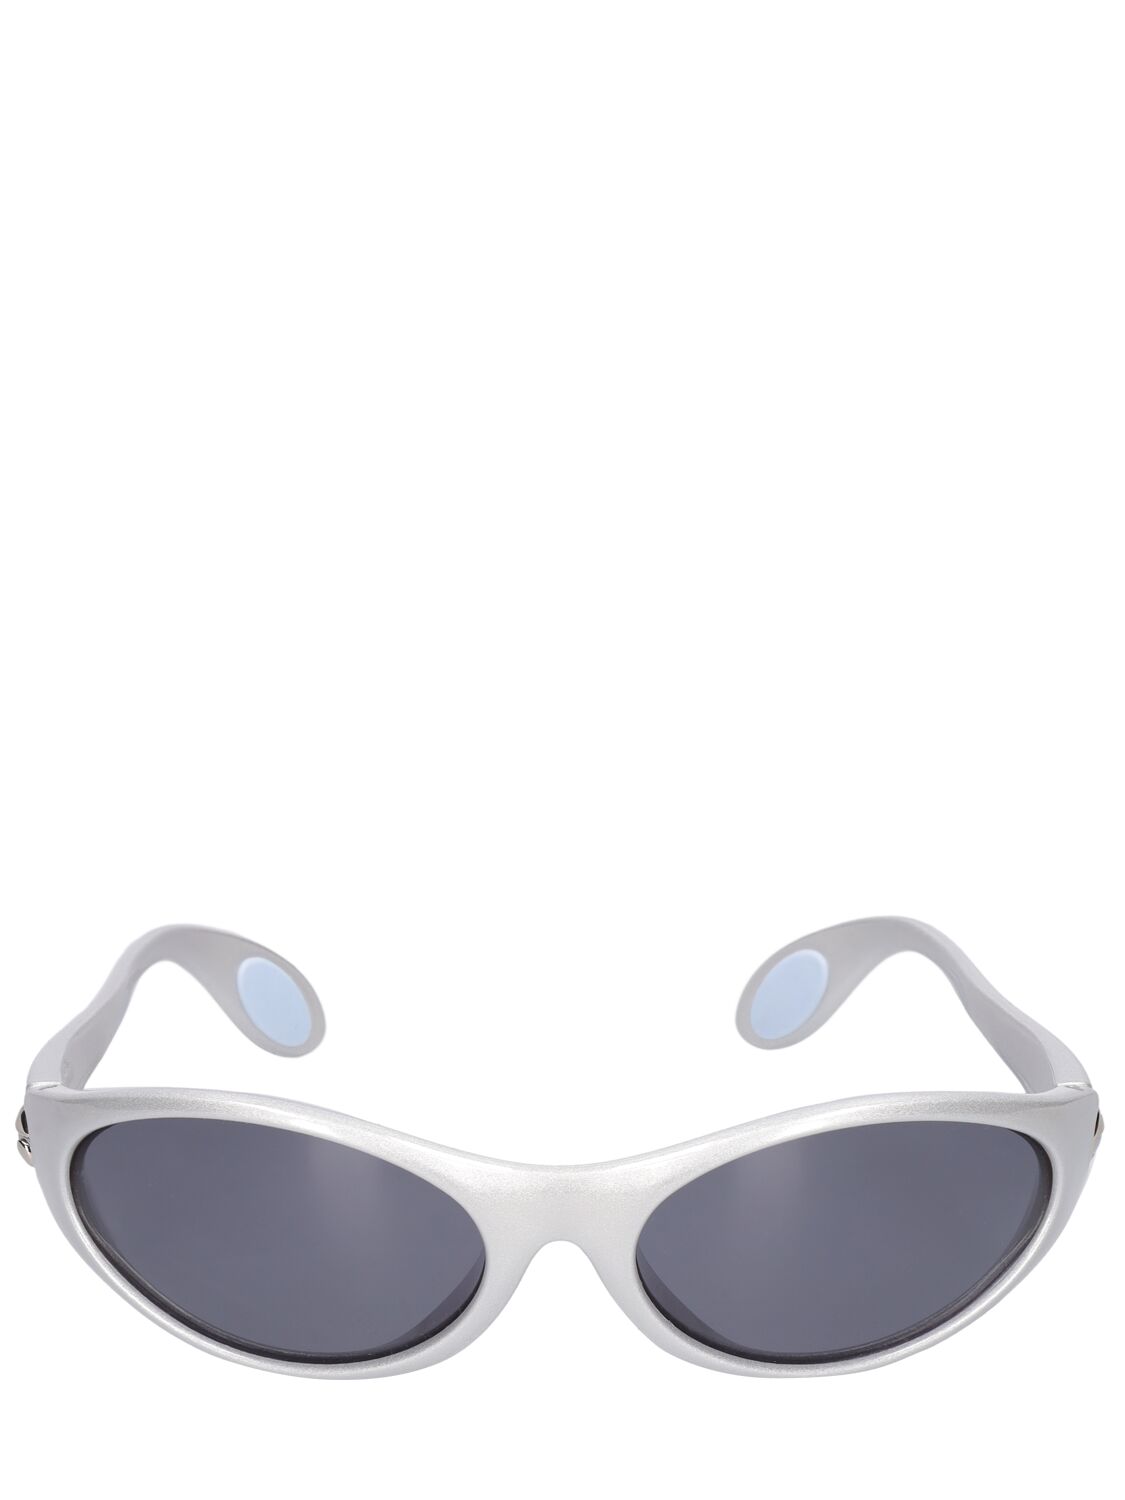 Logo Cycling Sunglasses